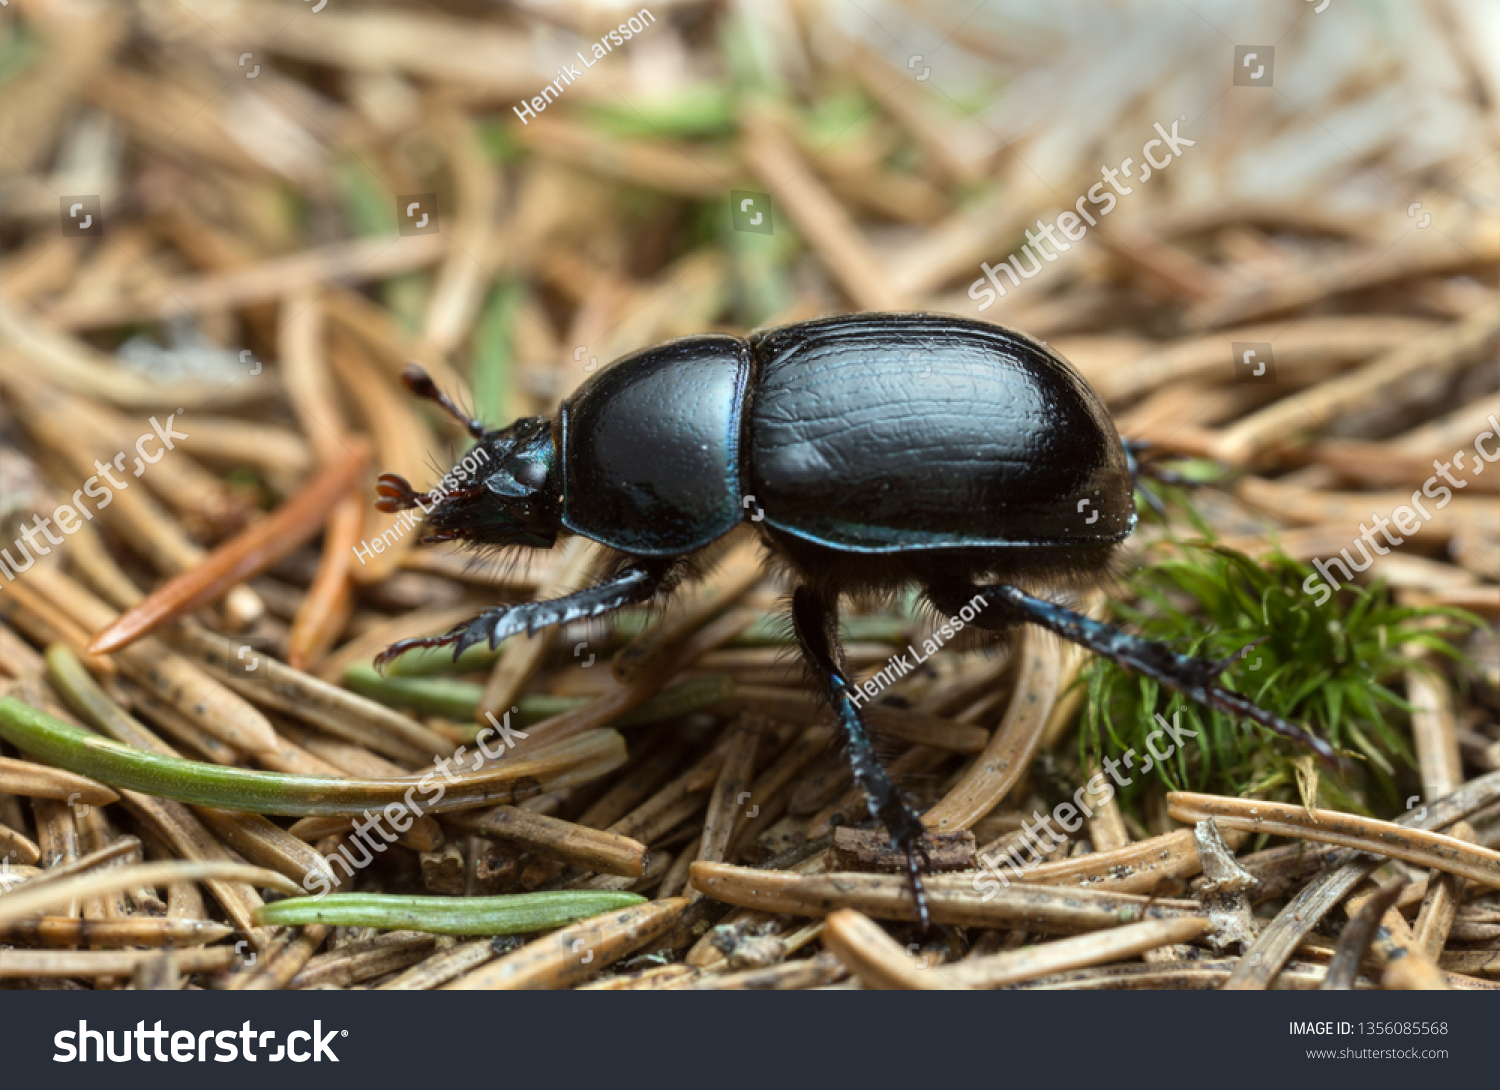 Dor beetle, Anoplotrupes stercorosus, macro photo #1356085568